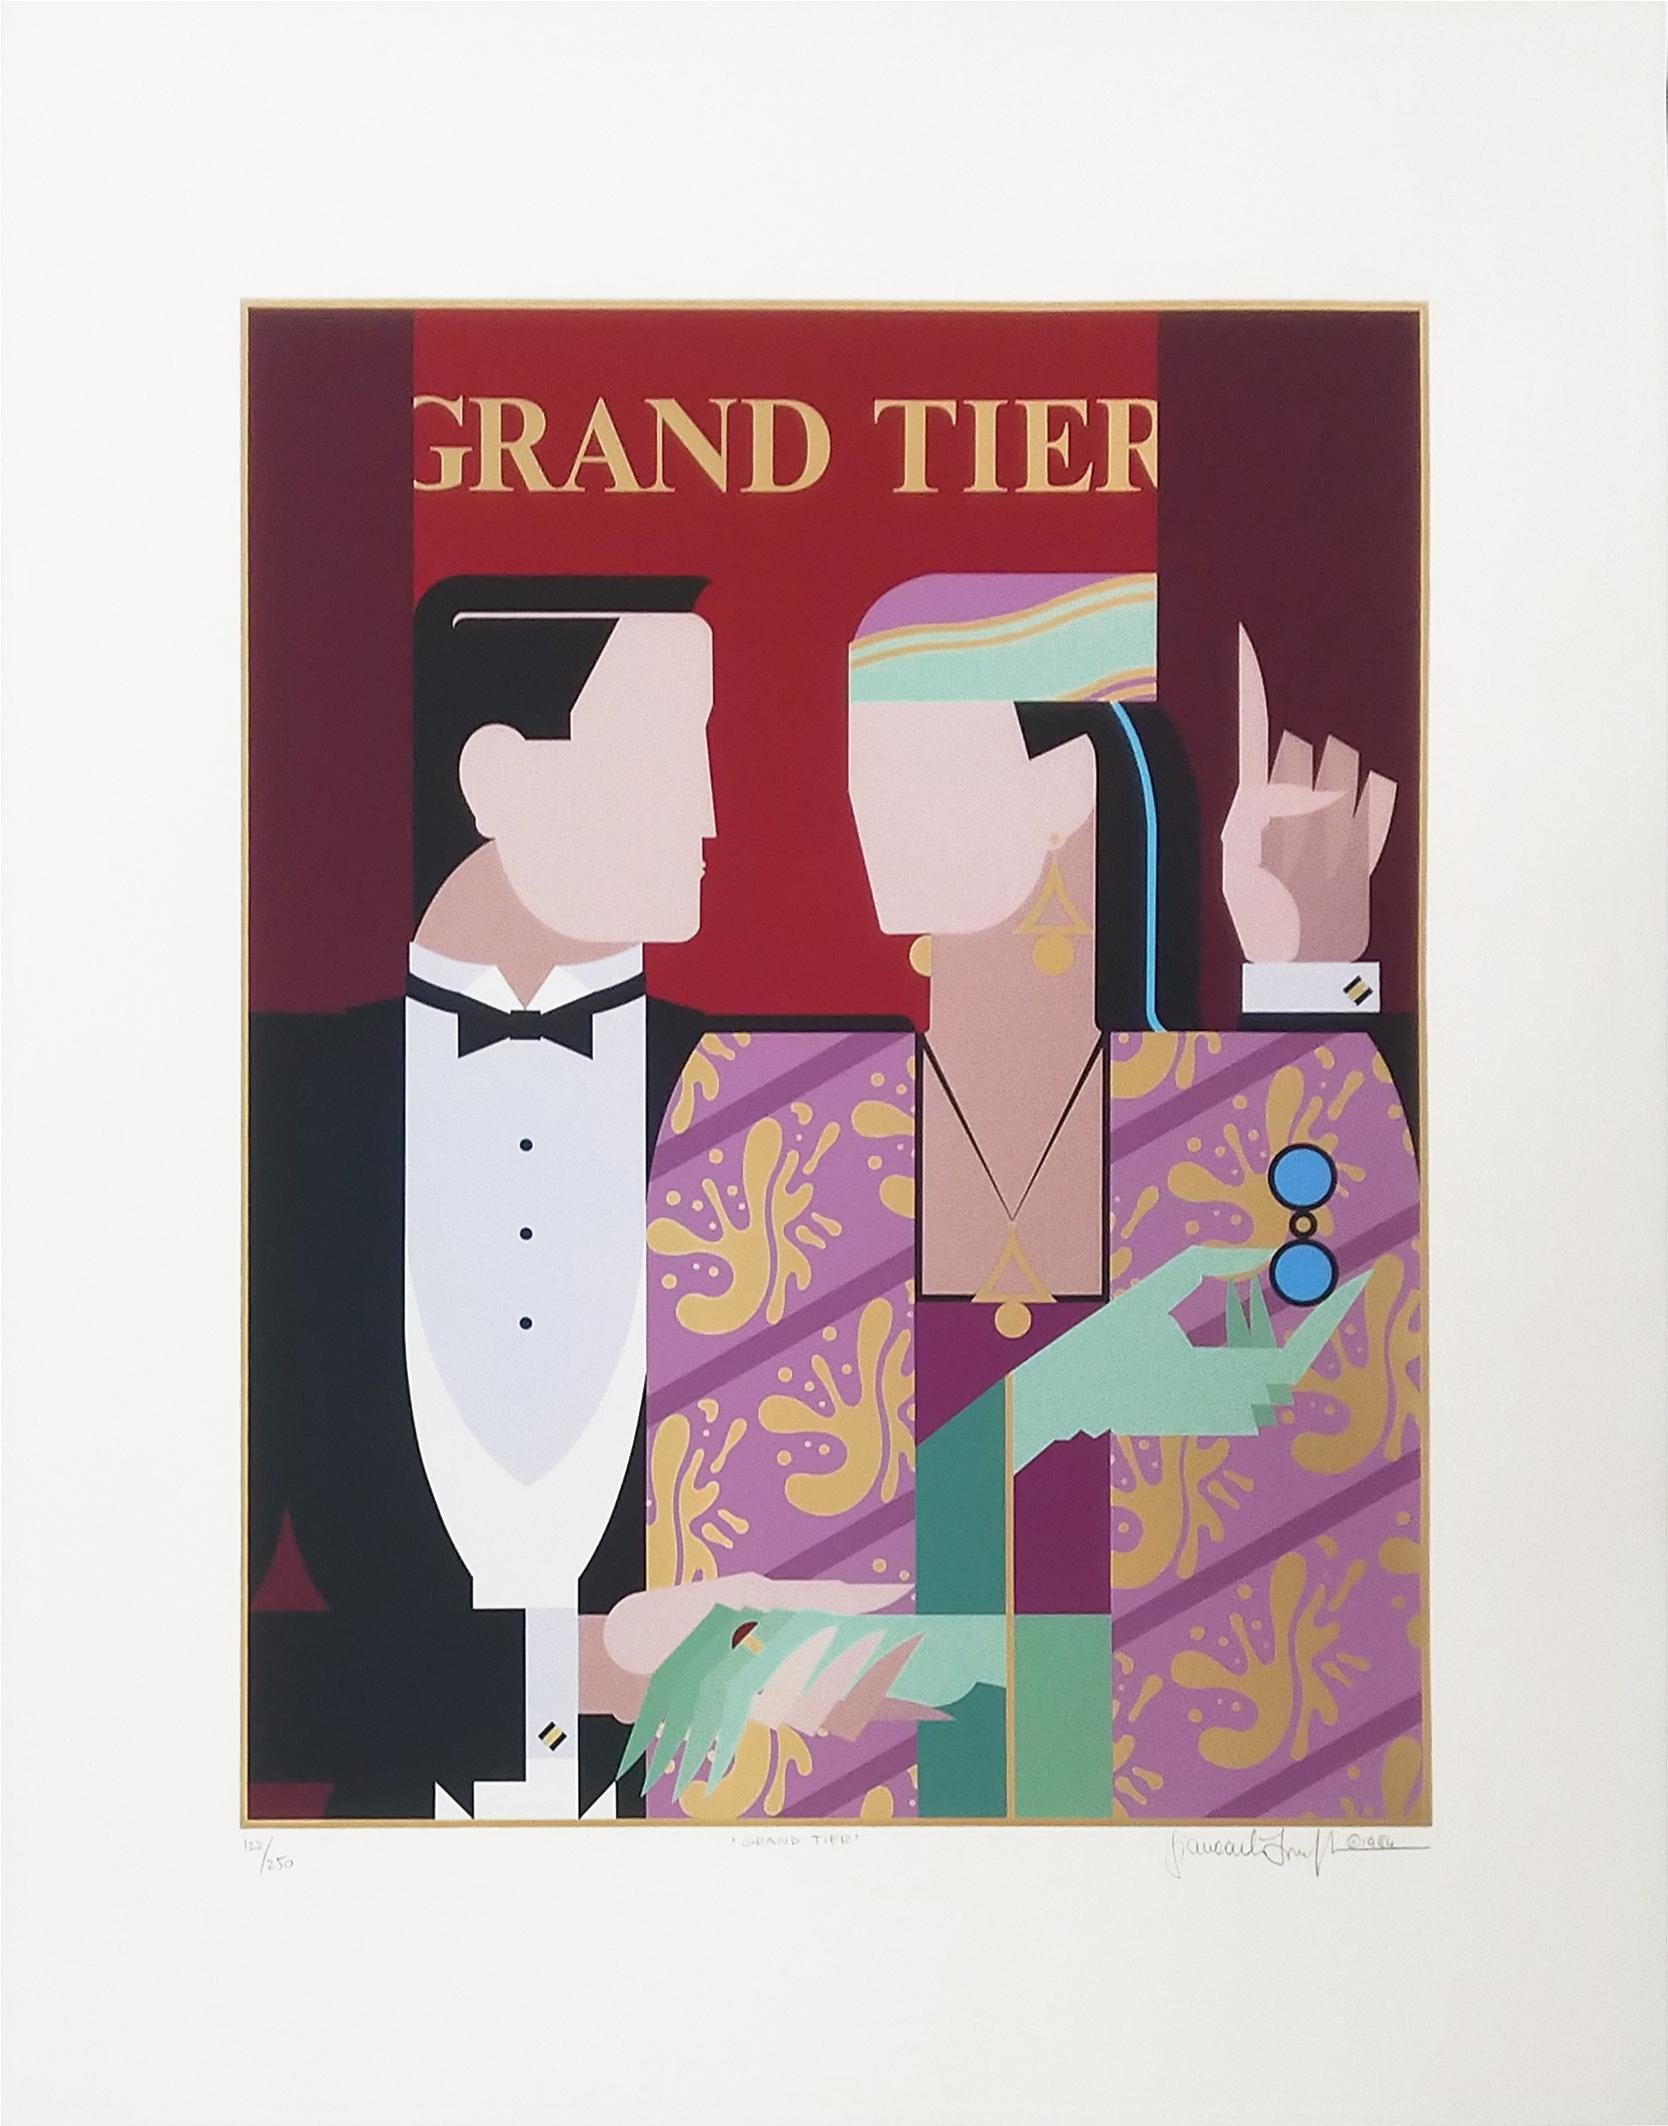 GRAND TIER - Print by Giancarlo Impiglia